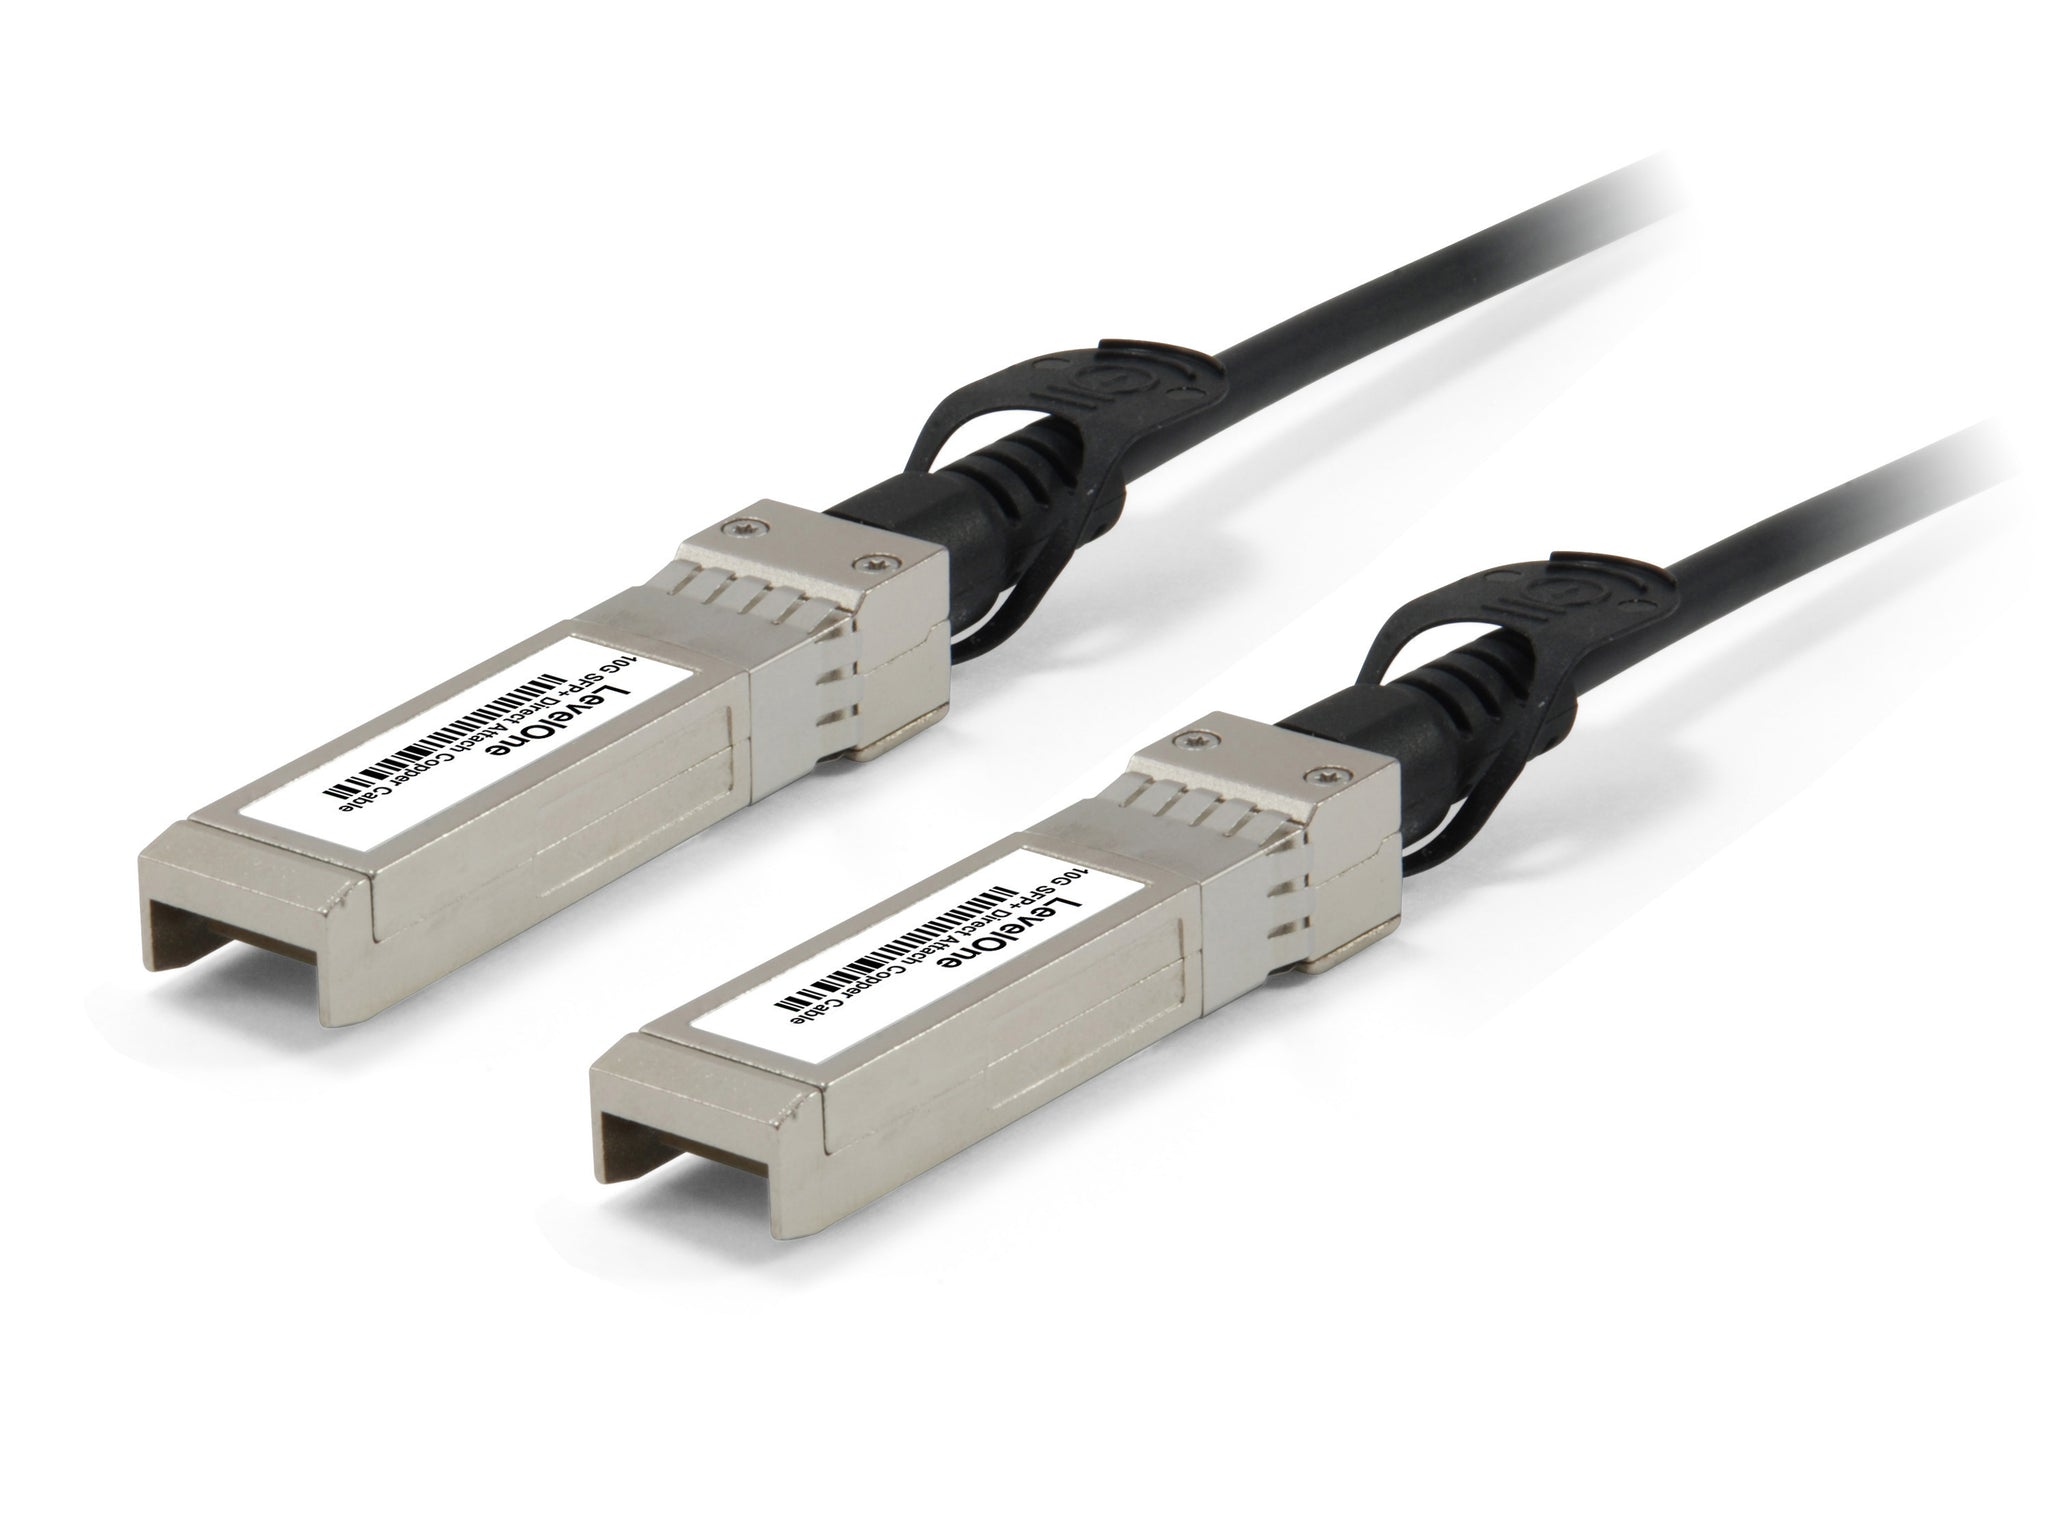 DAC-0105 10Gbps SFP+ Direct Attach Copper Cable, 5m, Twinax